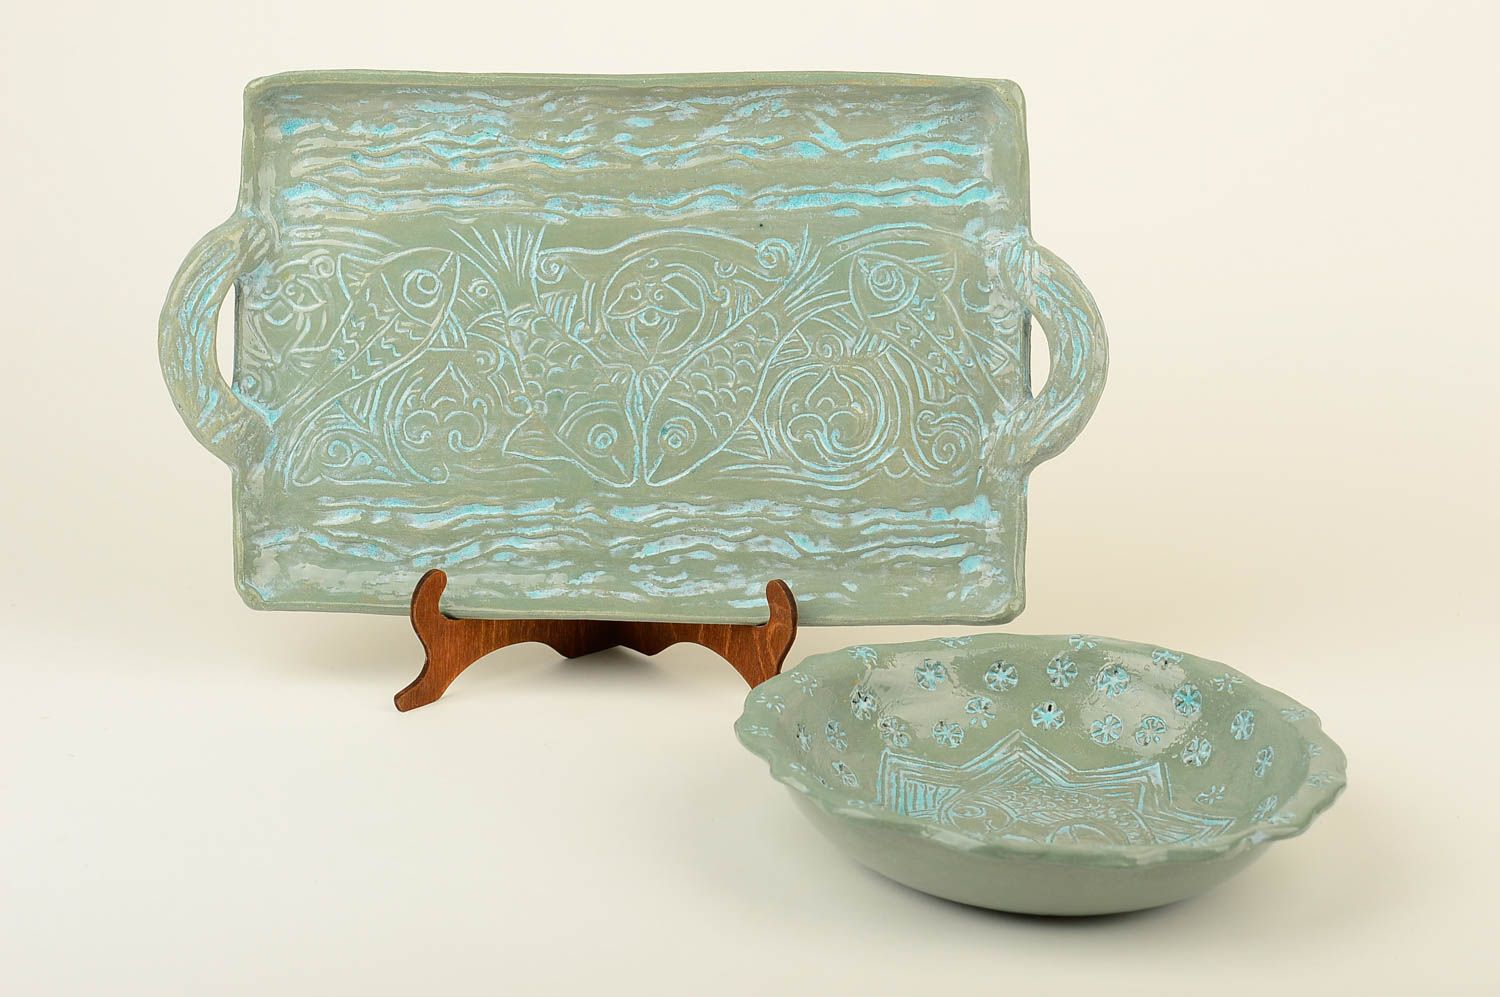 Unusual handmade ceramic bowl molded ceramic tray stylish kitchenware ideas photo 1